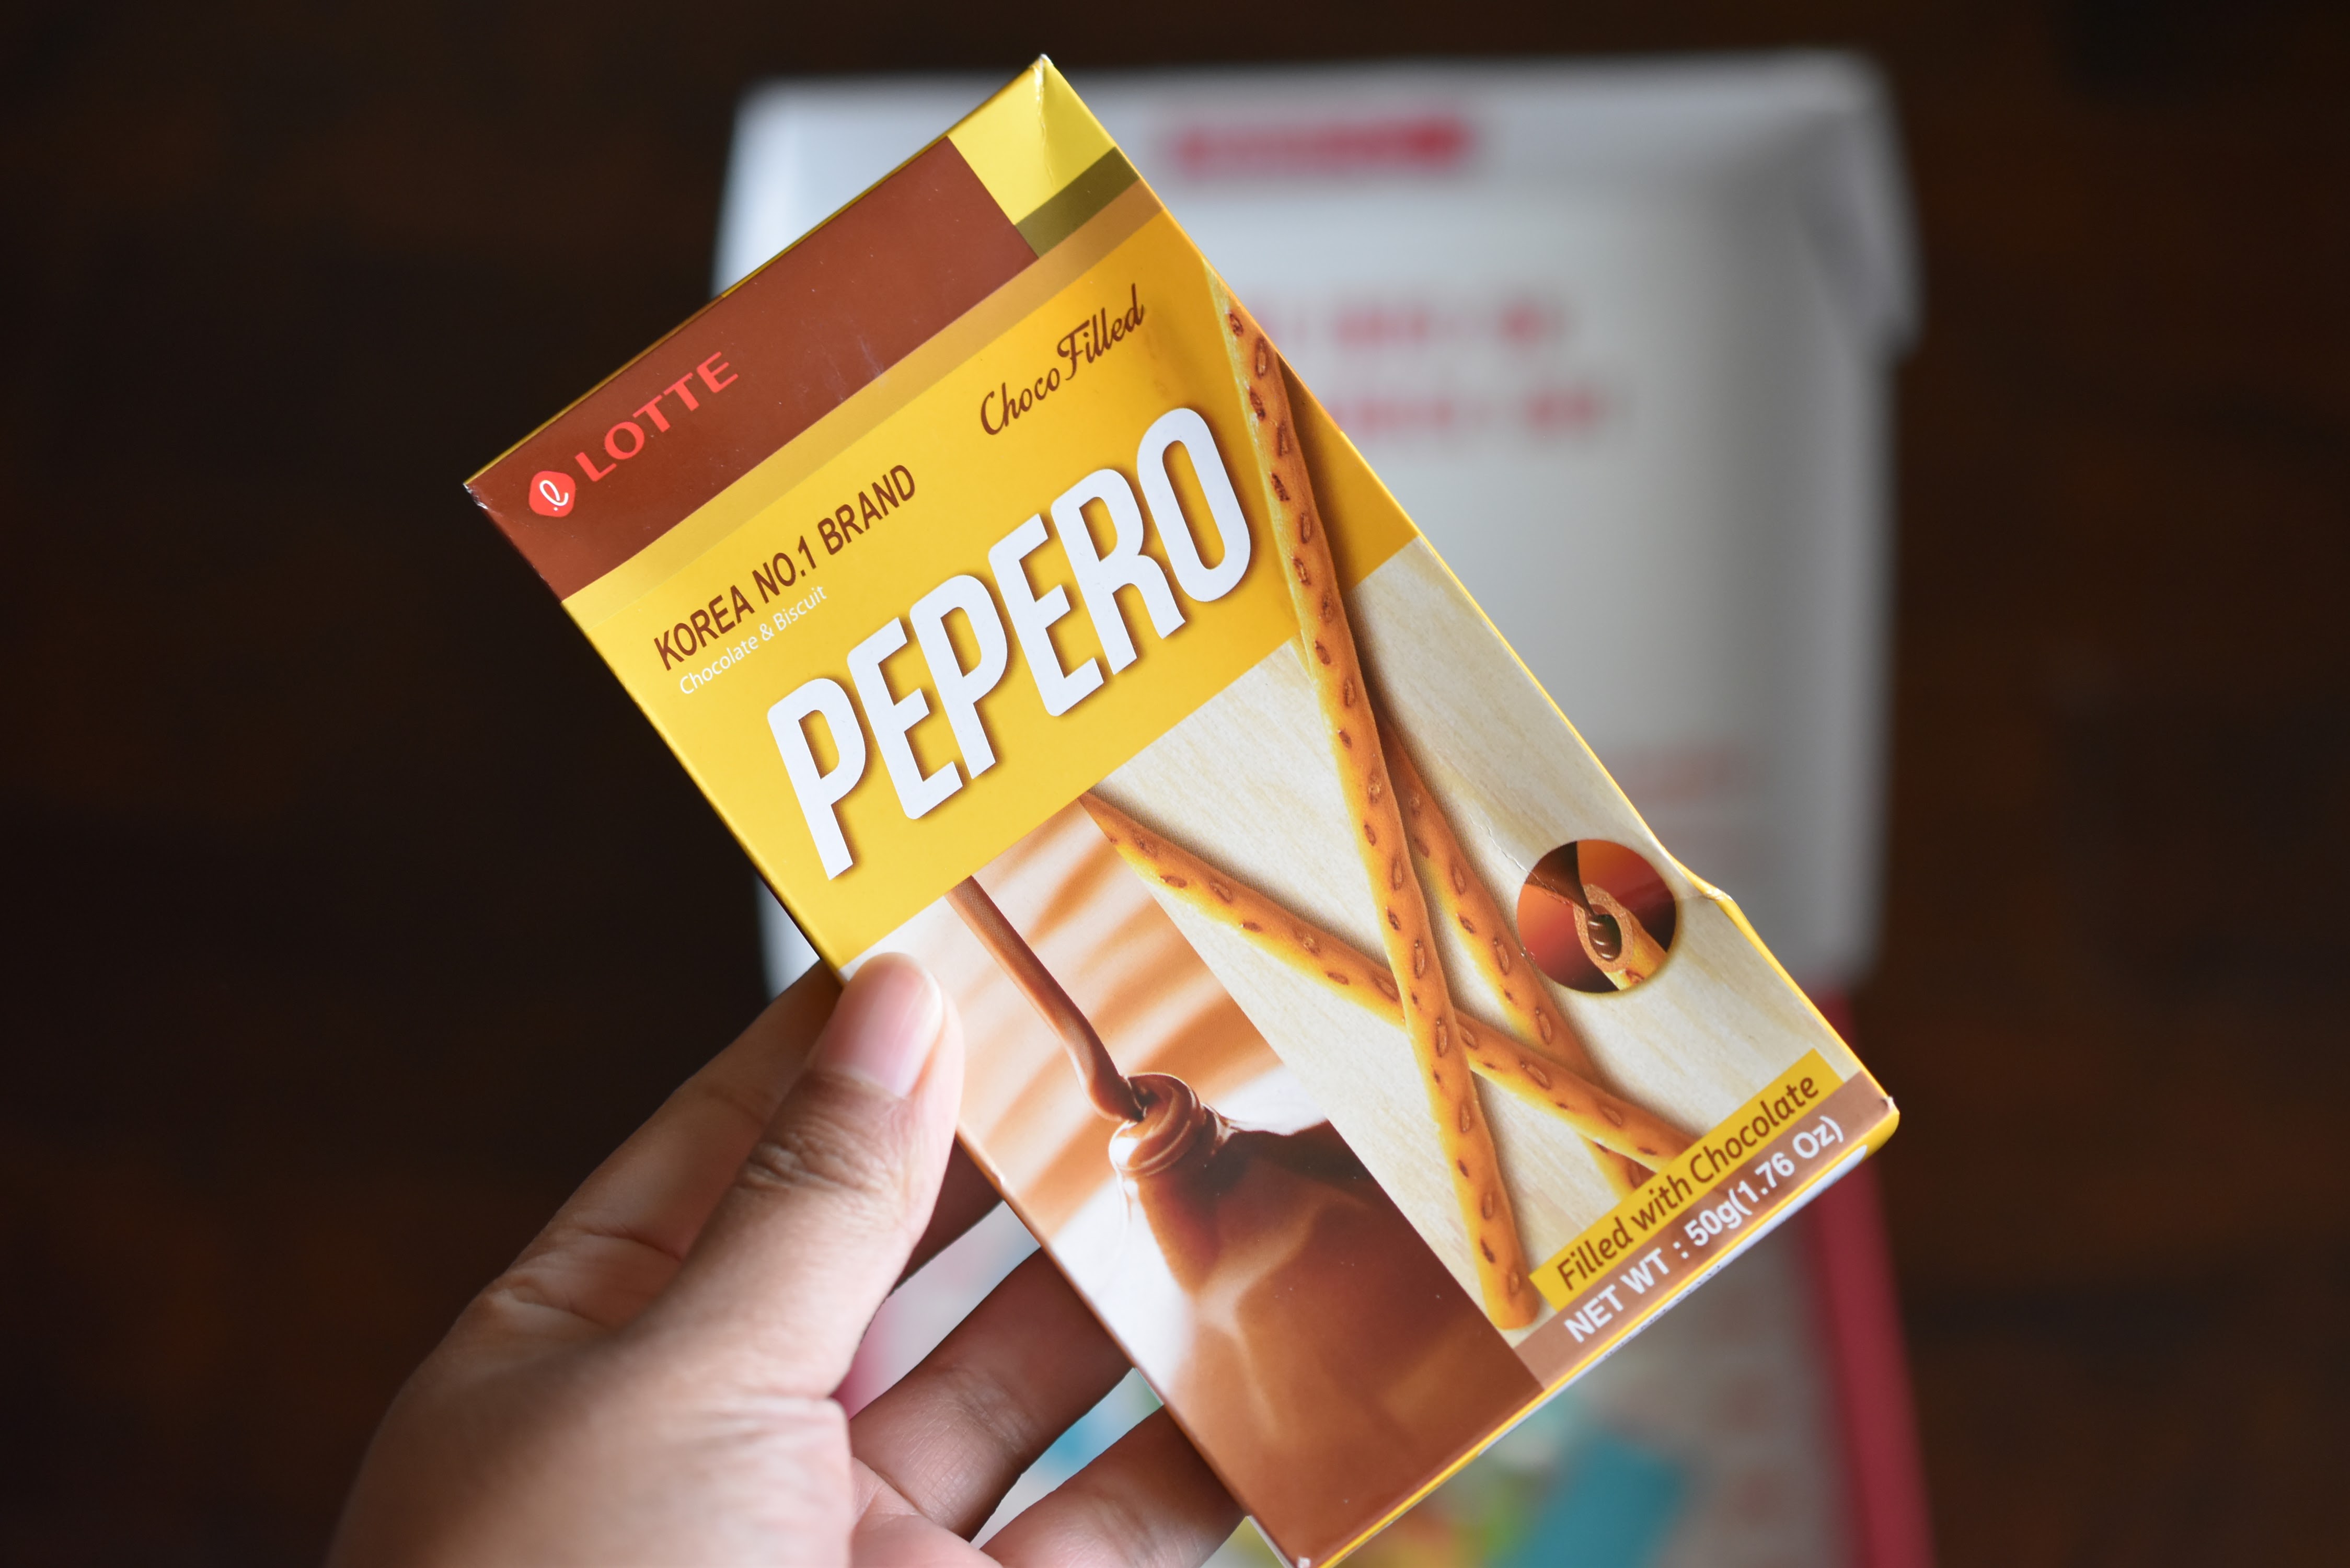 Pepporo- Nude Choco